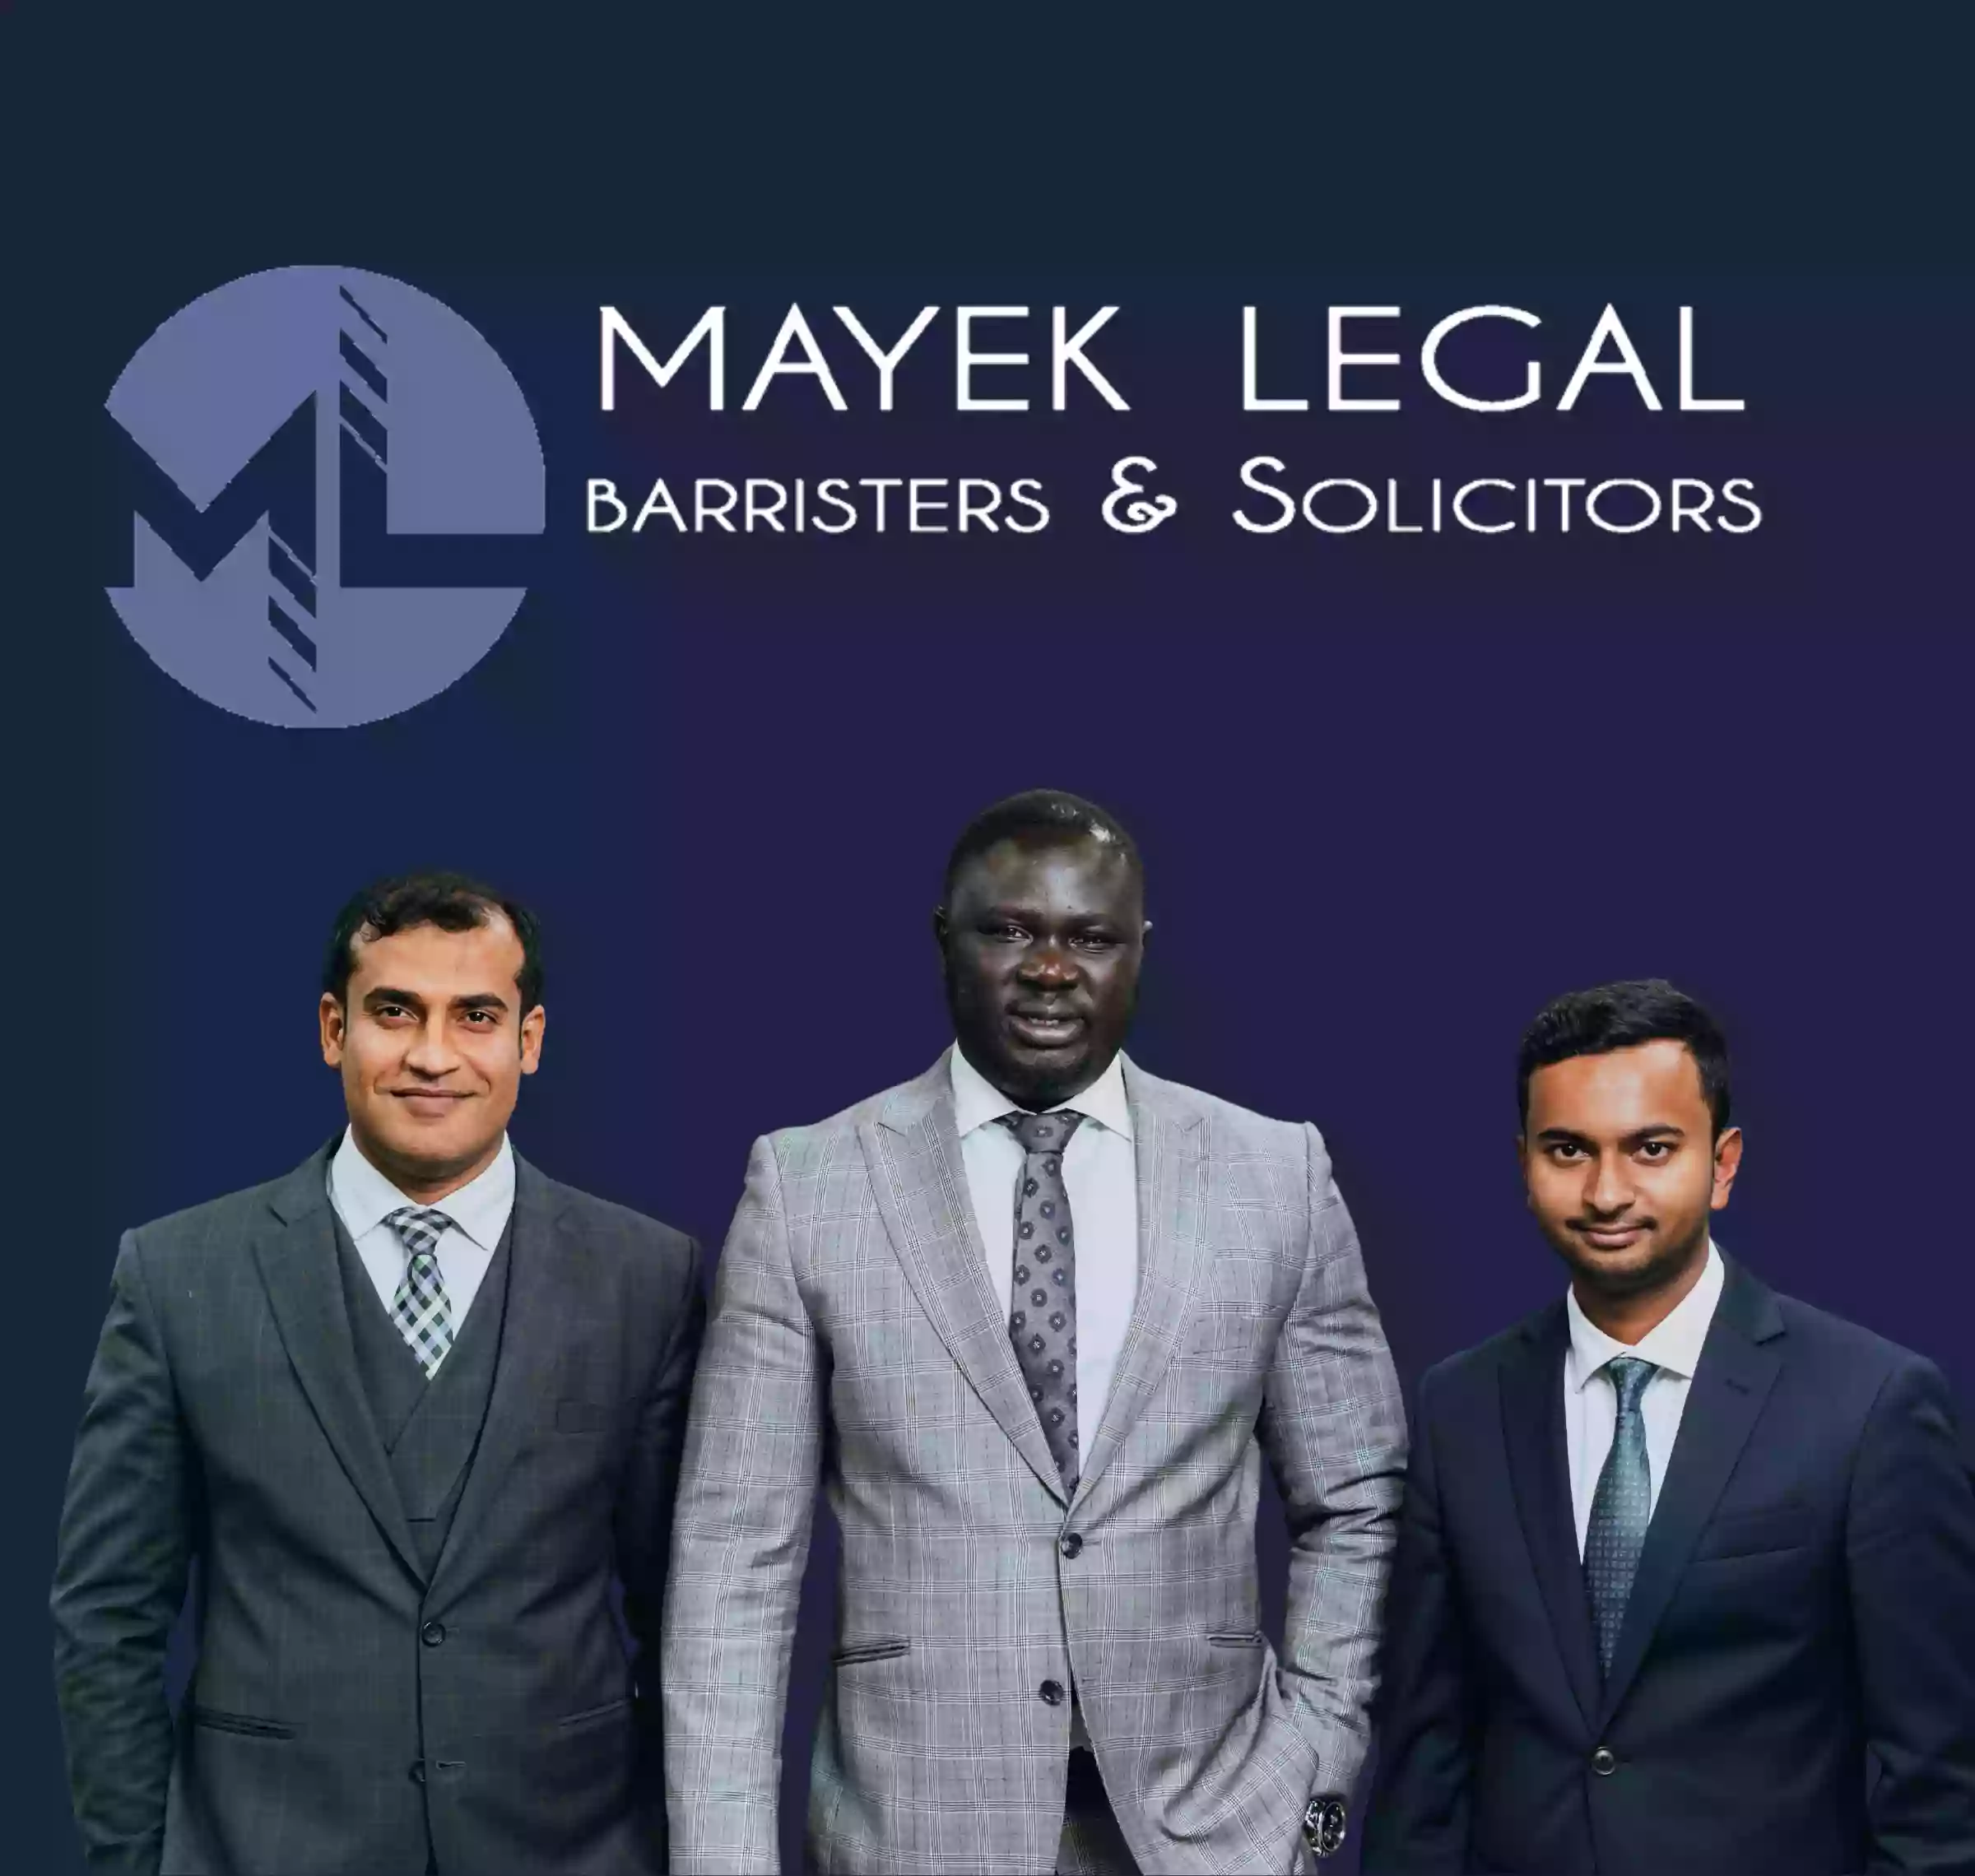 Mayek Legal, Barristers & Solicitors